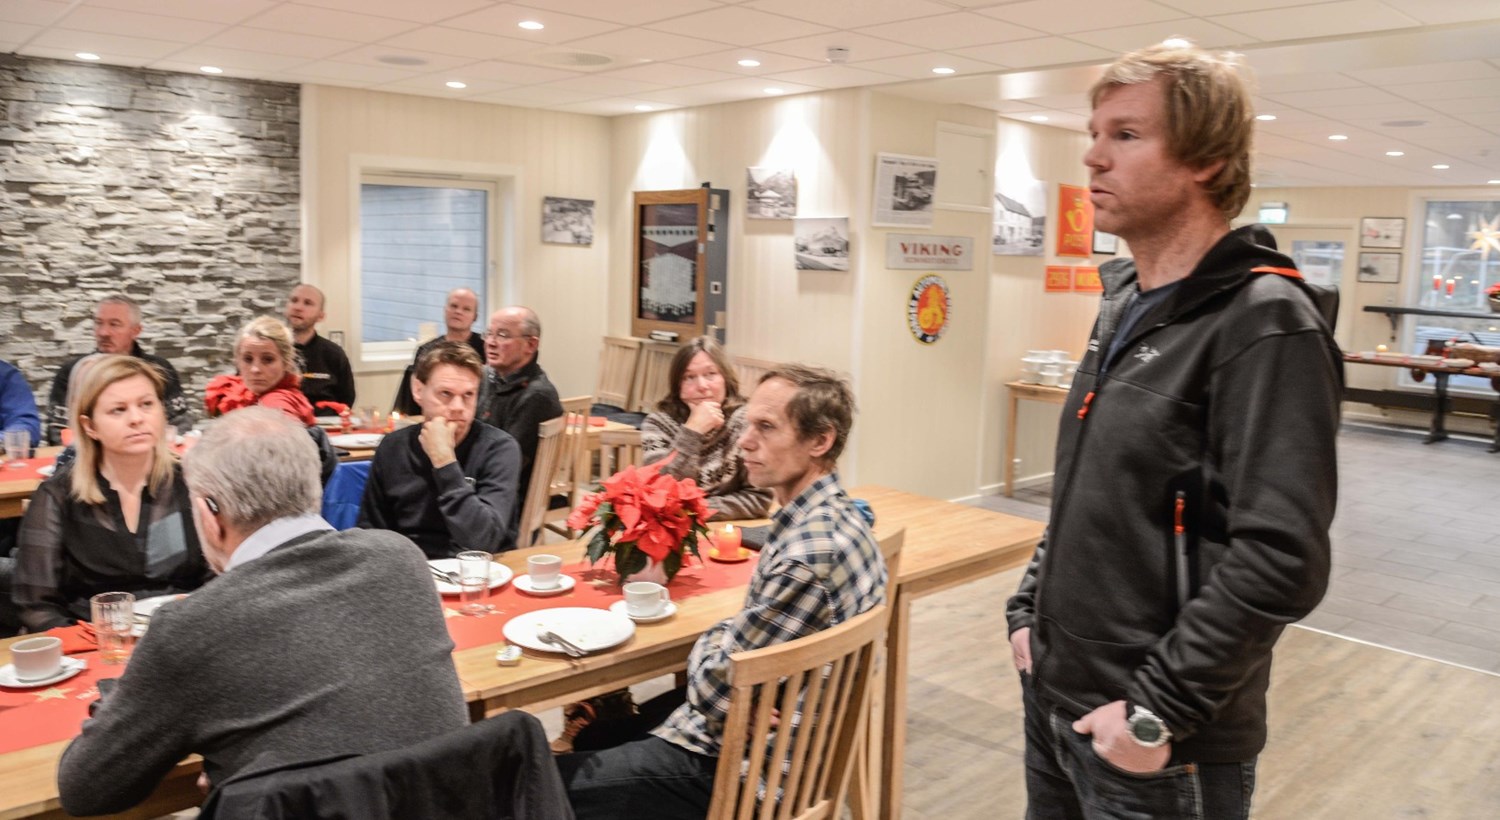 Leif Øyvind Solemsli presenterte sin nye arbeidsgjevar Wyssen avalanche control på næringsfrukost i Vang.